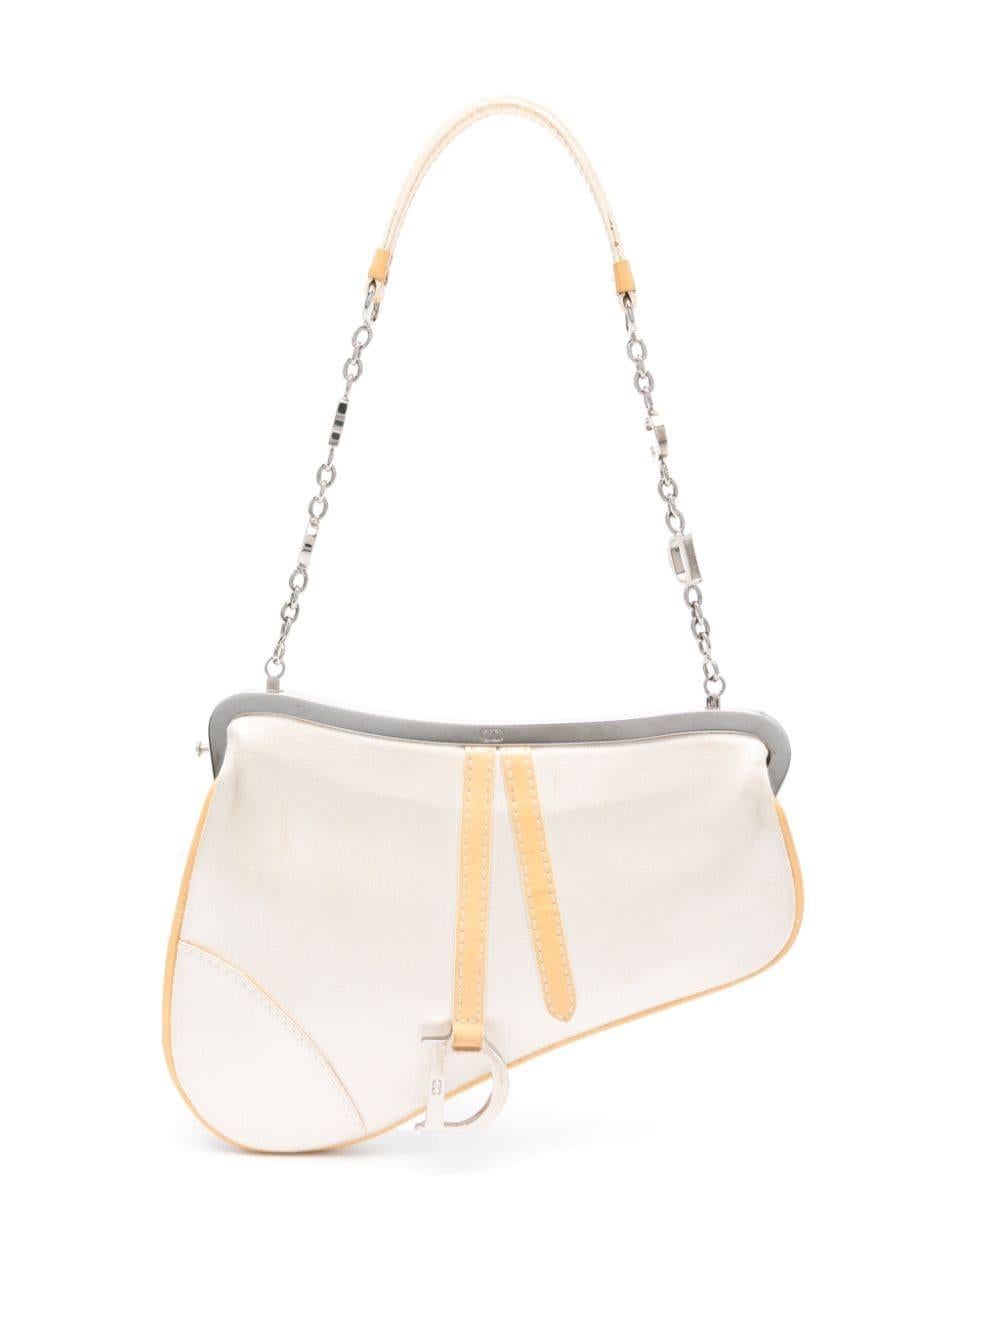 Christian Dior by J Galliano Ivory Silk Mini Saddle Bag For Sale 2